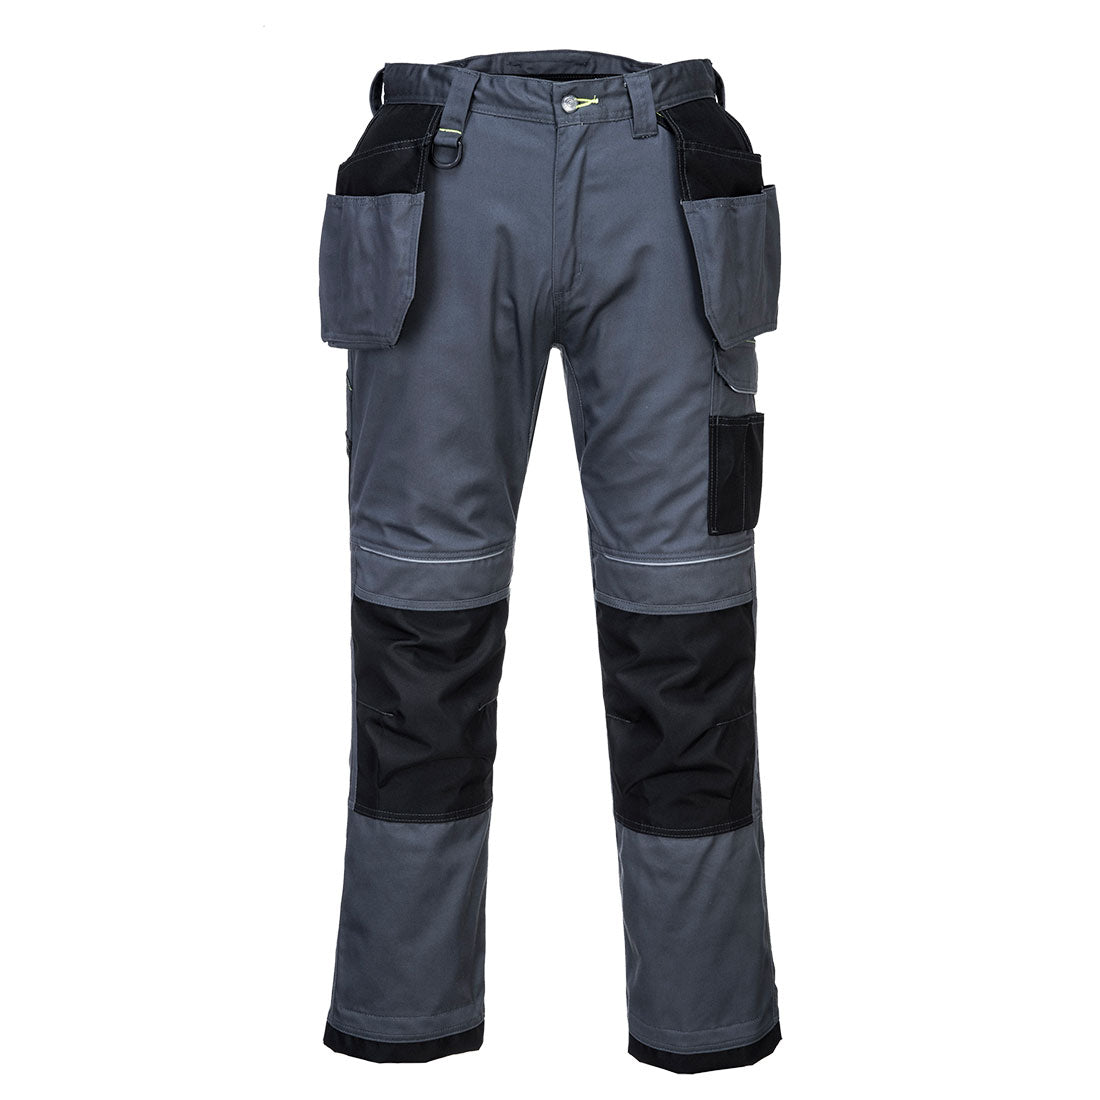 Portwest T602 - Grey/Black  30 Regular PW3 Holster Work Trousers Combat Cargo Pants